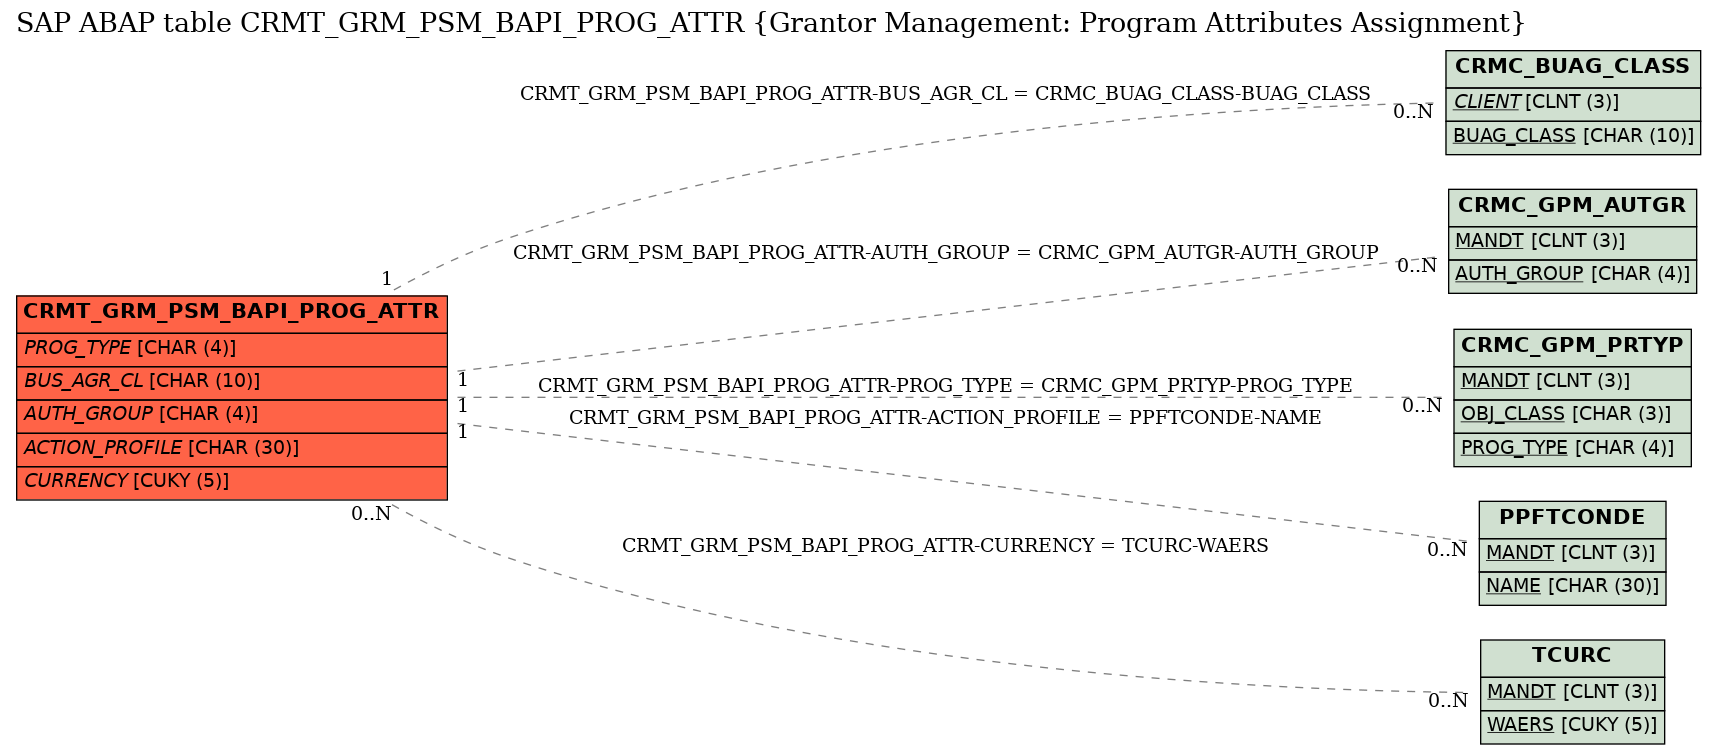 E-R Diagram for table CRMT_GRM_PSM_BAPI_PROG_ATTR (Grantor Management: Program Attributes Assignment)